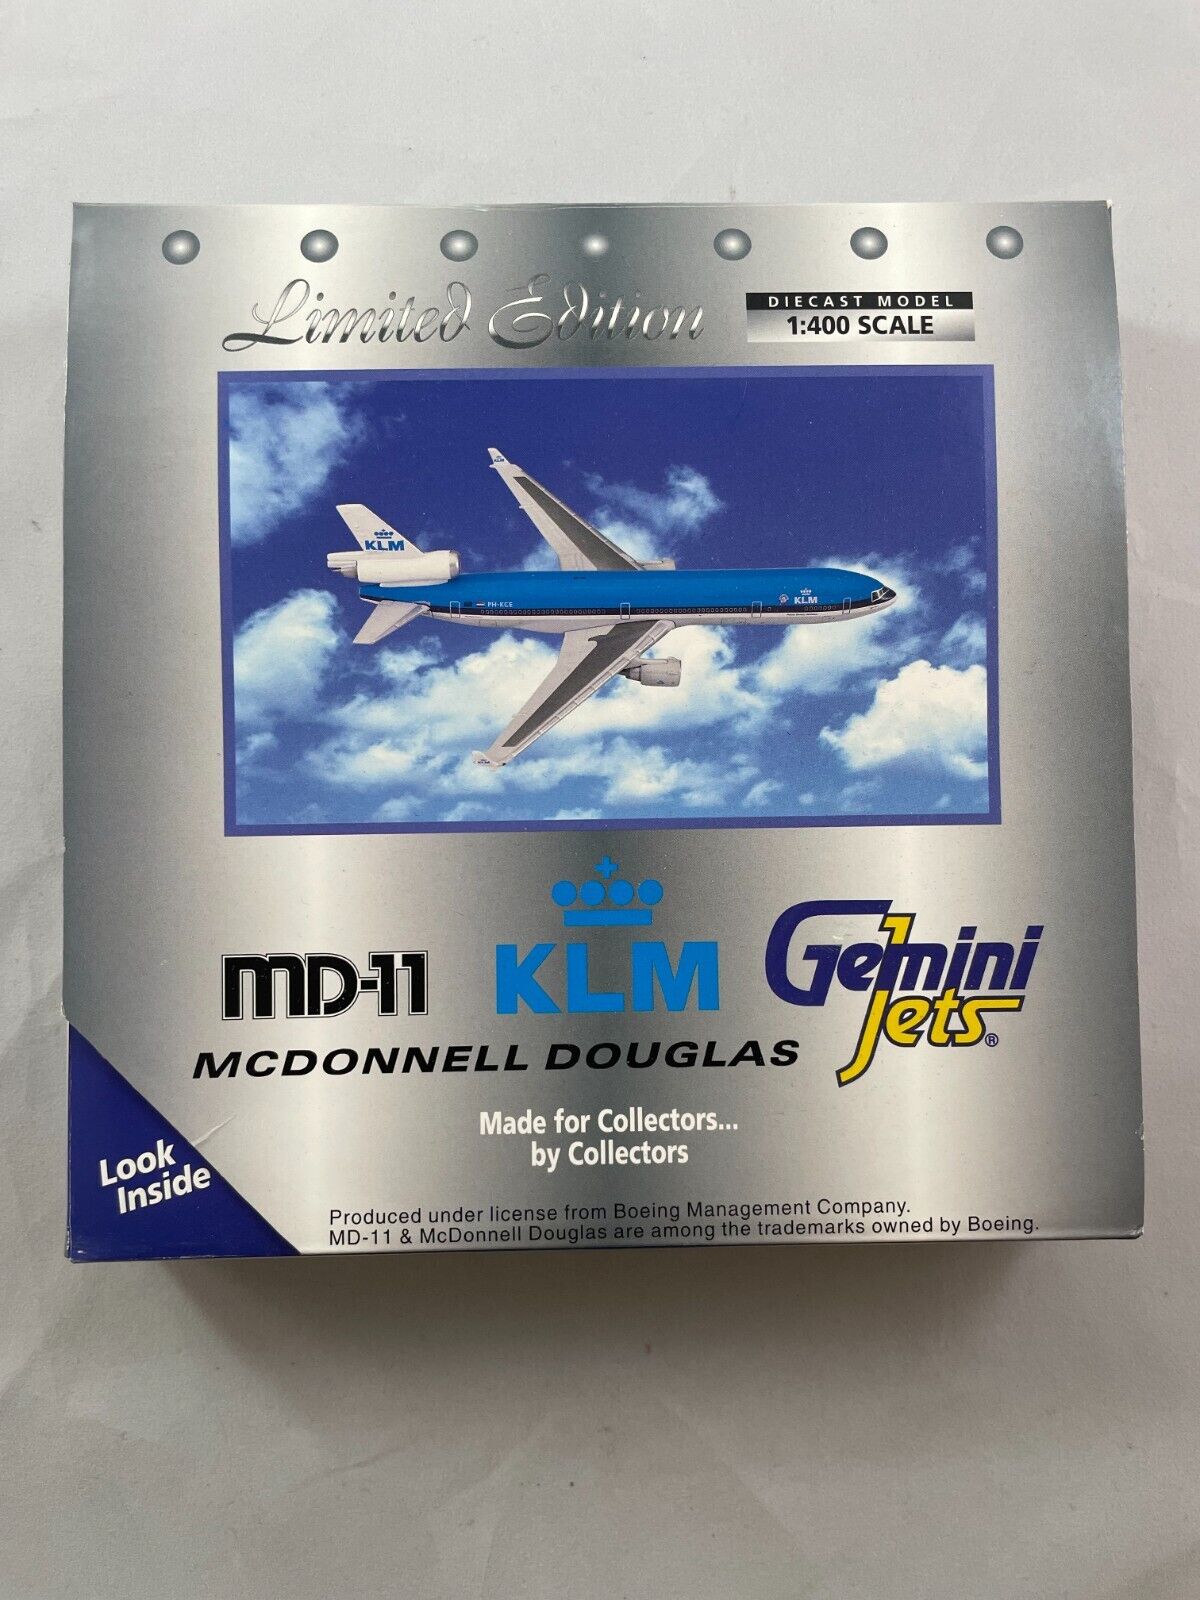 Limited Edition - Geminijets - Mcdonnell Douglas Md-11 Klm - 1:400 Scale